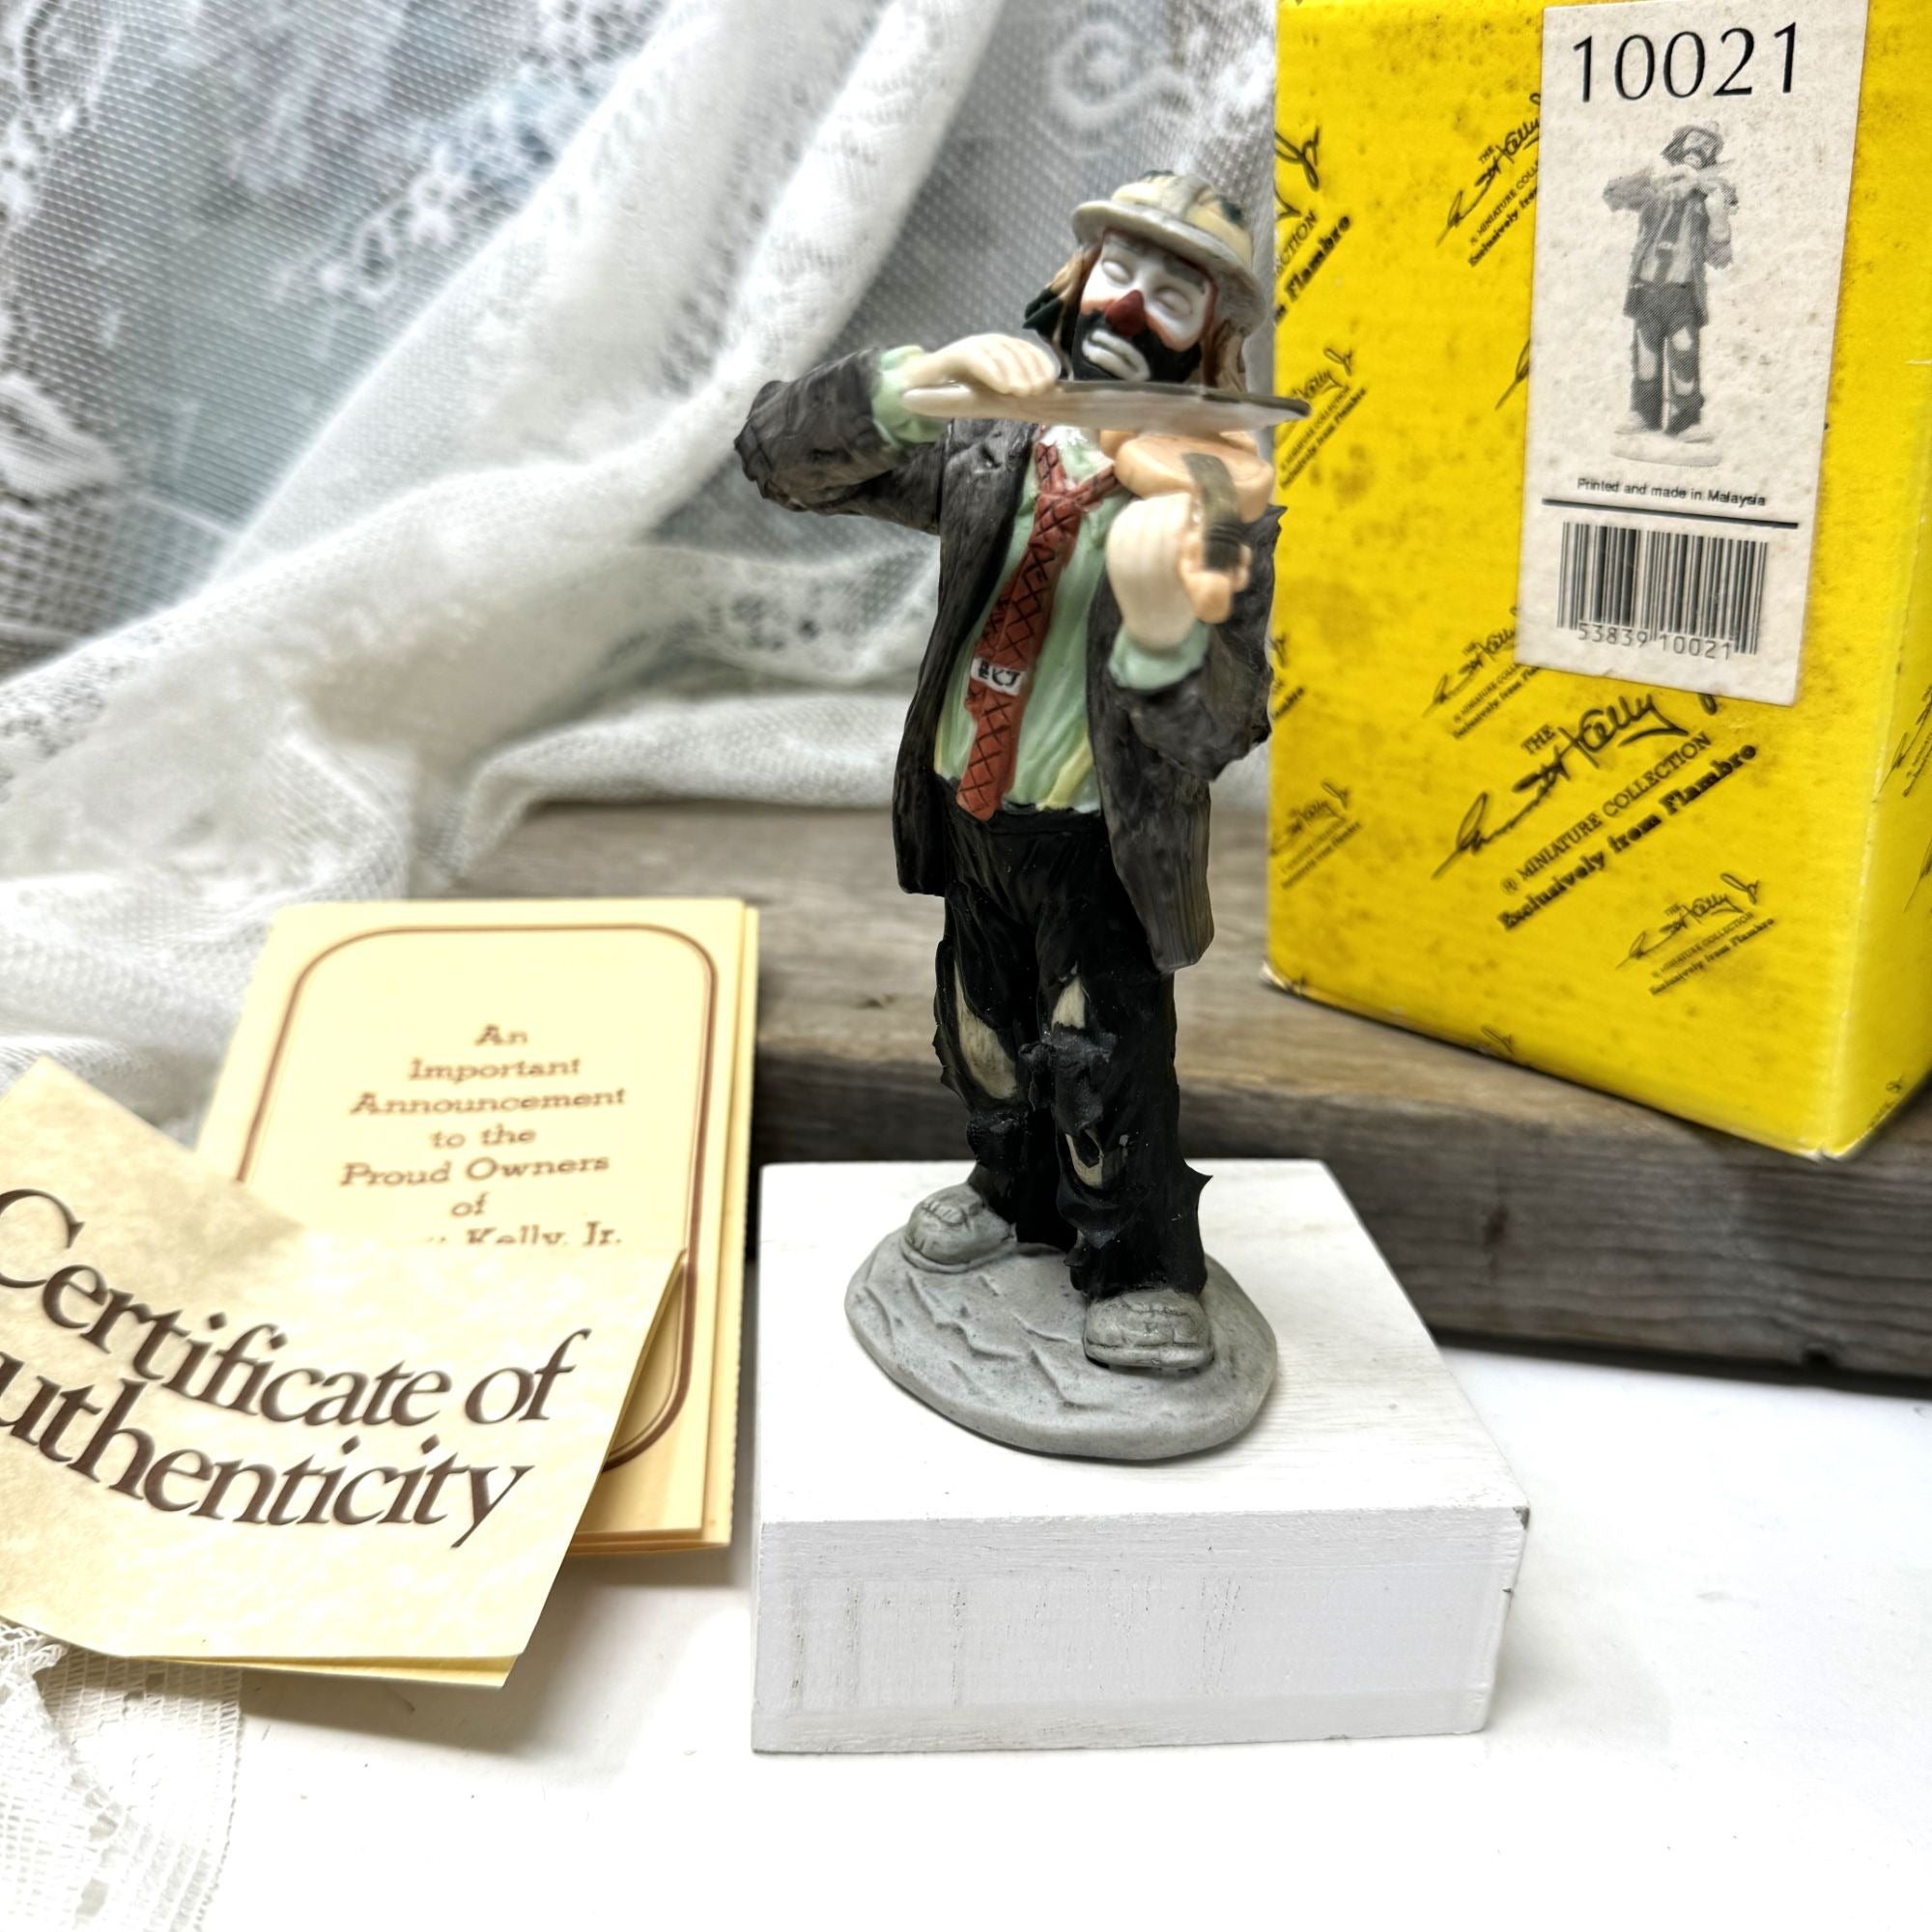 Emmett Kelly Jr Figurine No Strings Attached Original Box